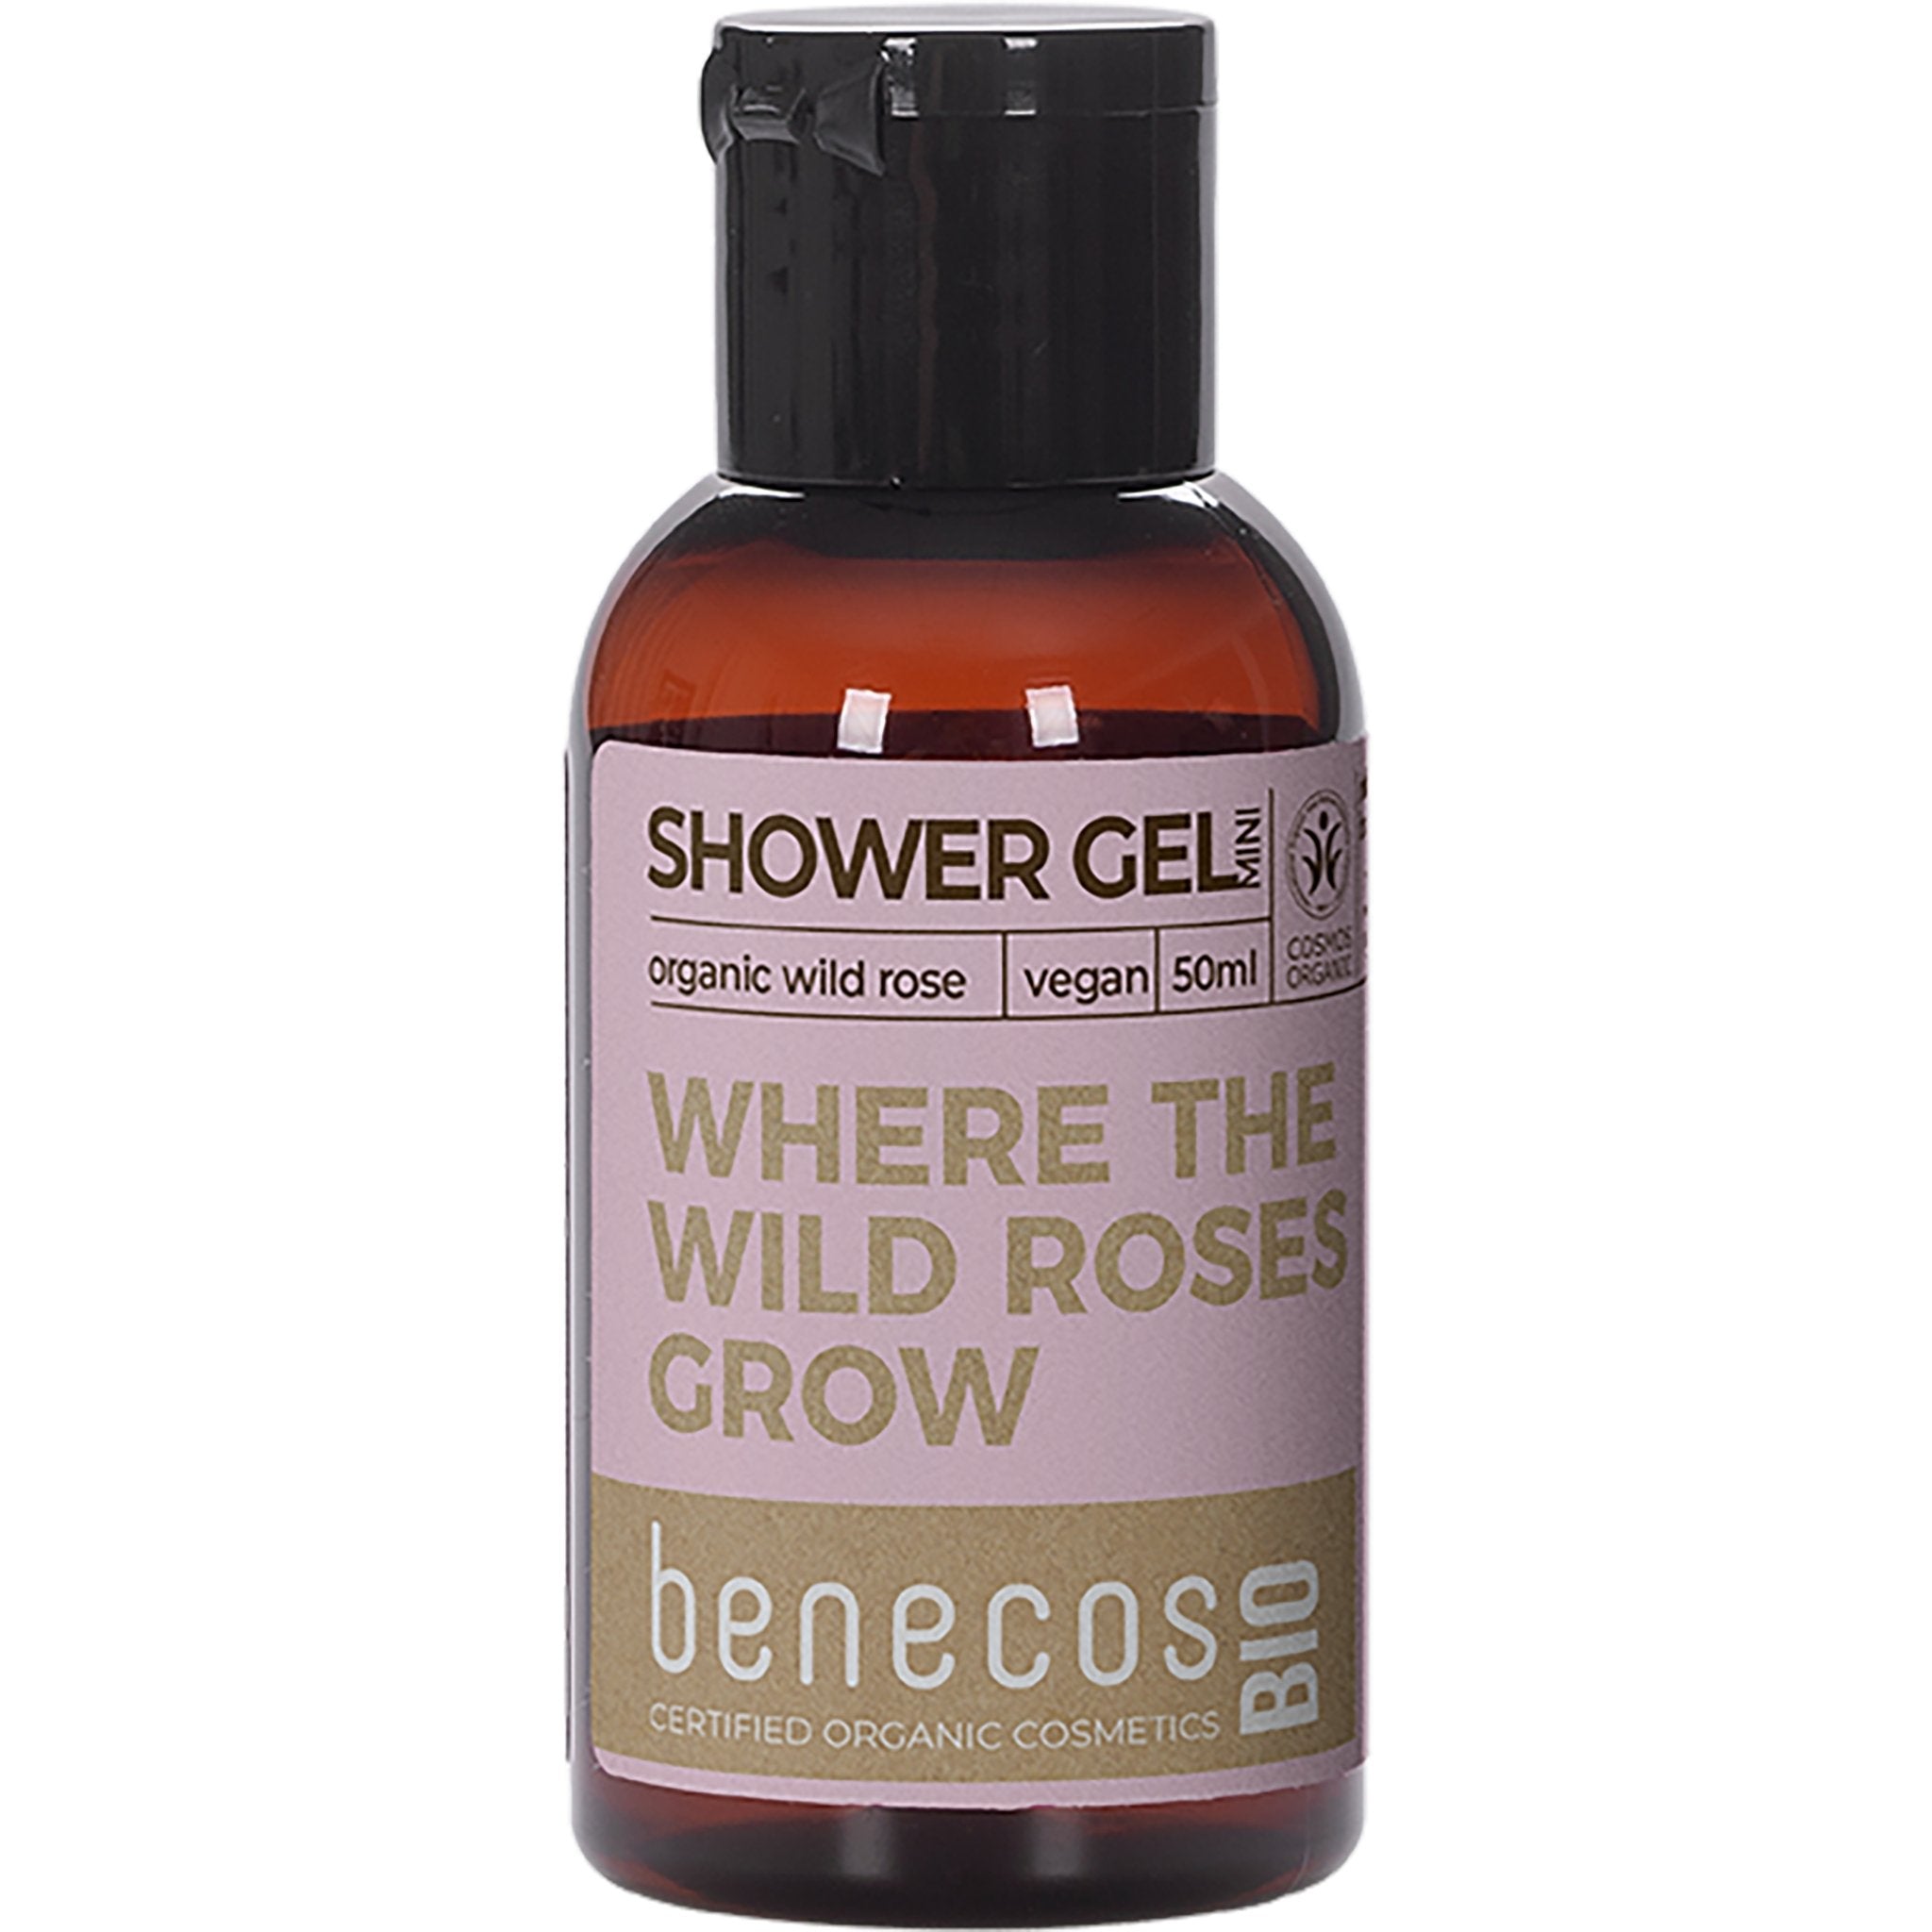 NEW Where The Wild Roses Grow Shower Gel - mypure.co.uk